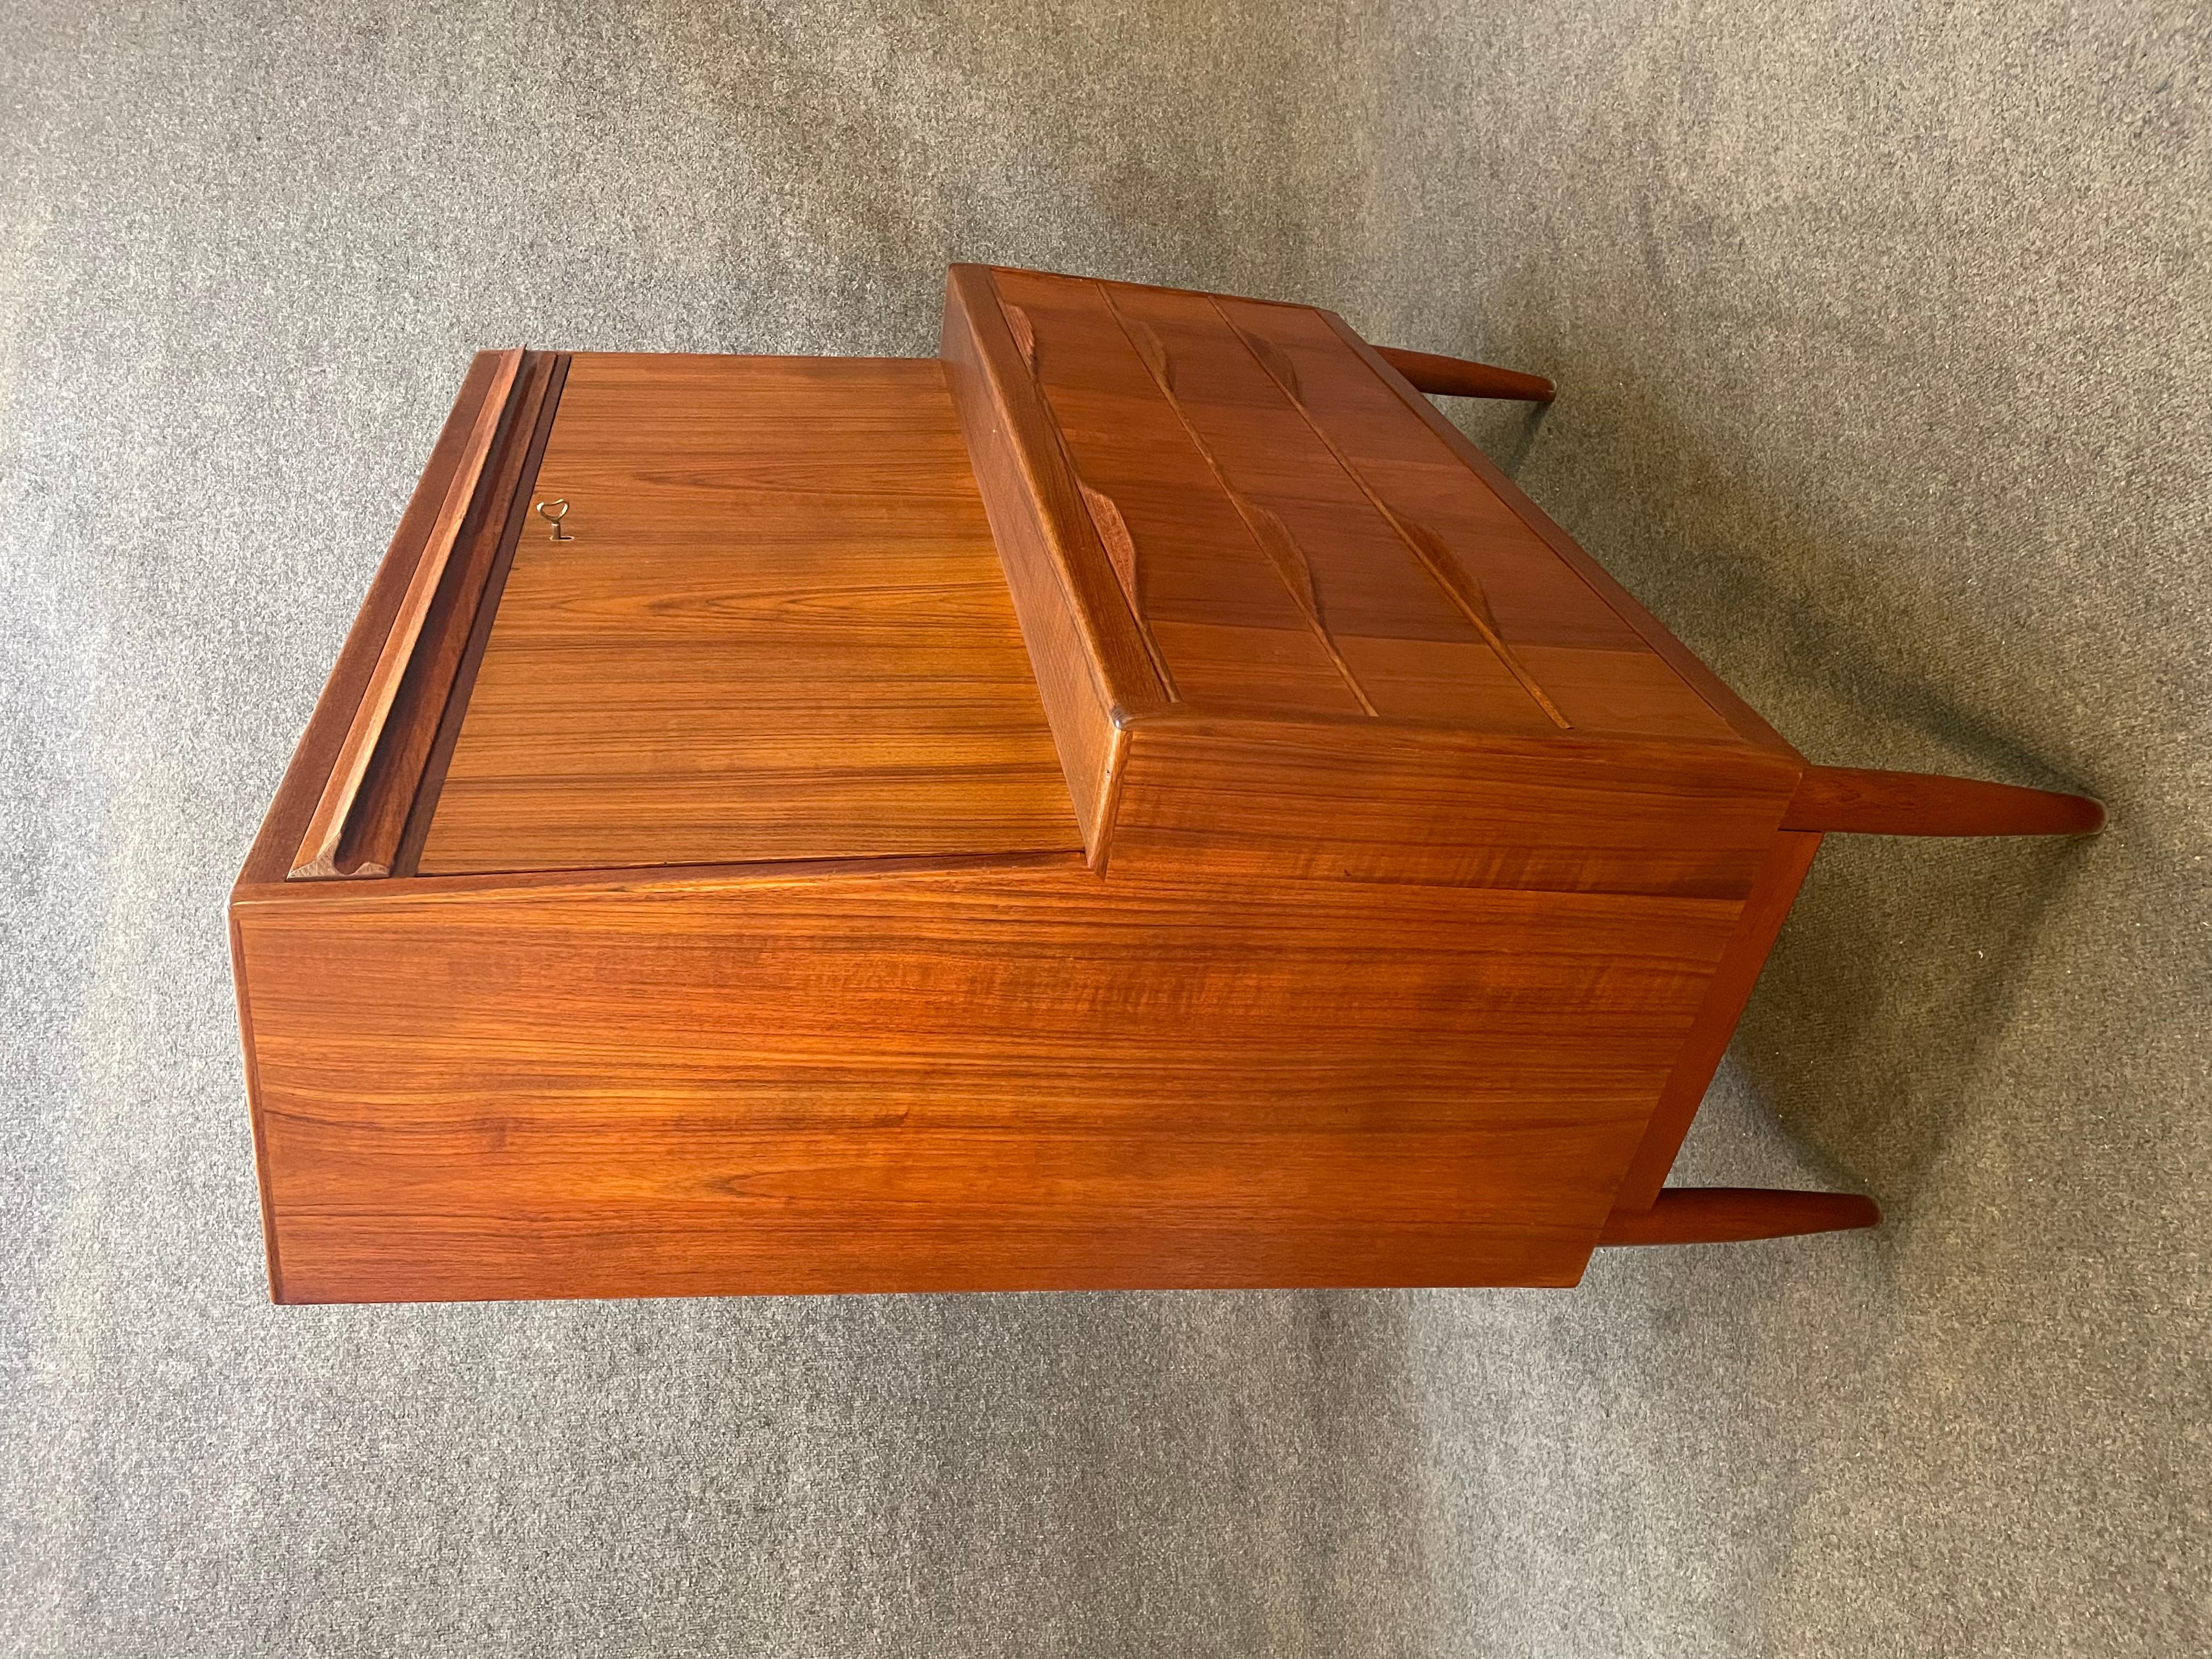 Vintage Danish Mid-Century Modern Teal Secretary Desk by Erling Torvitz For Sale 3